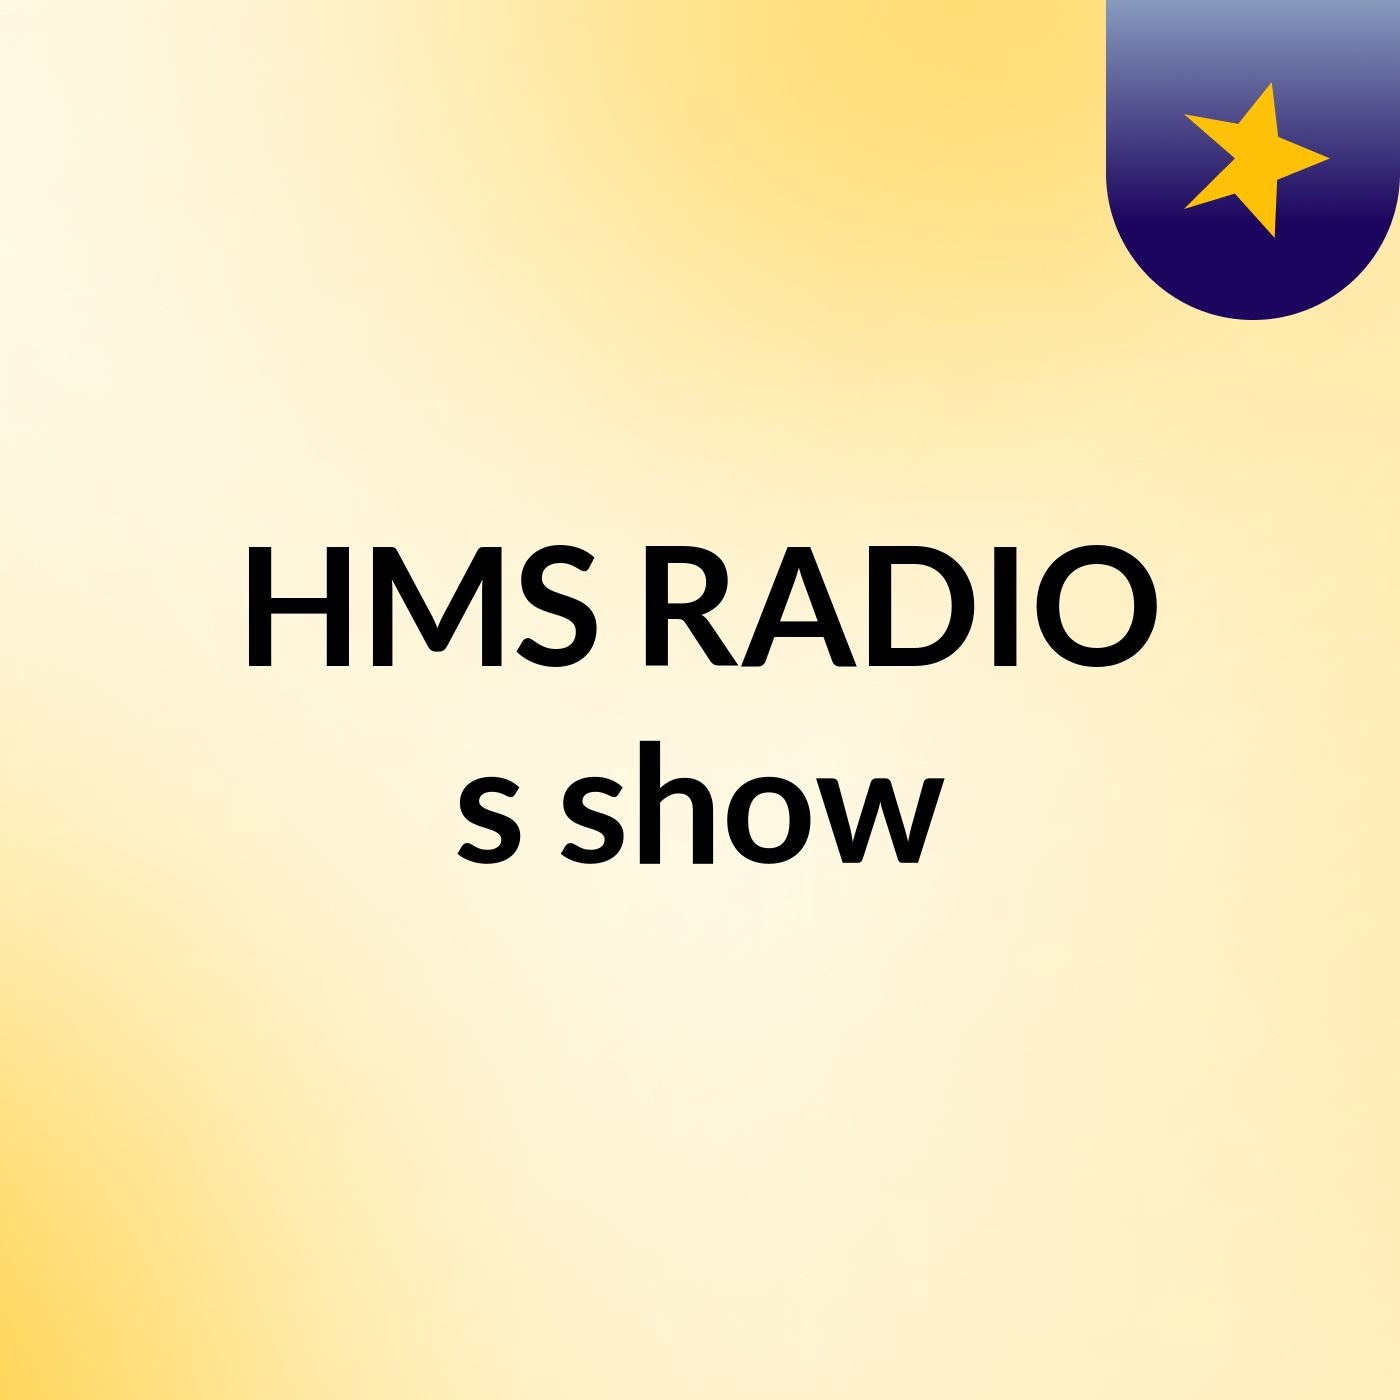 HMS RADIO's show